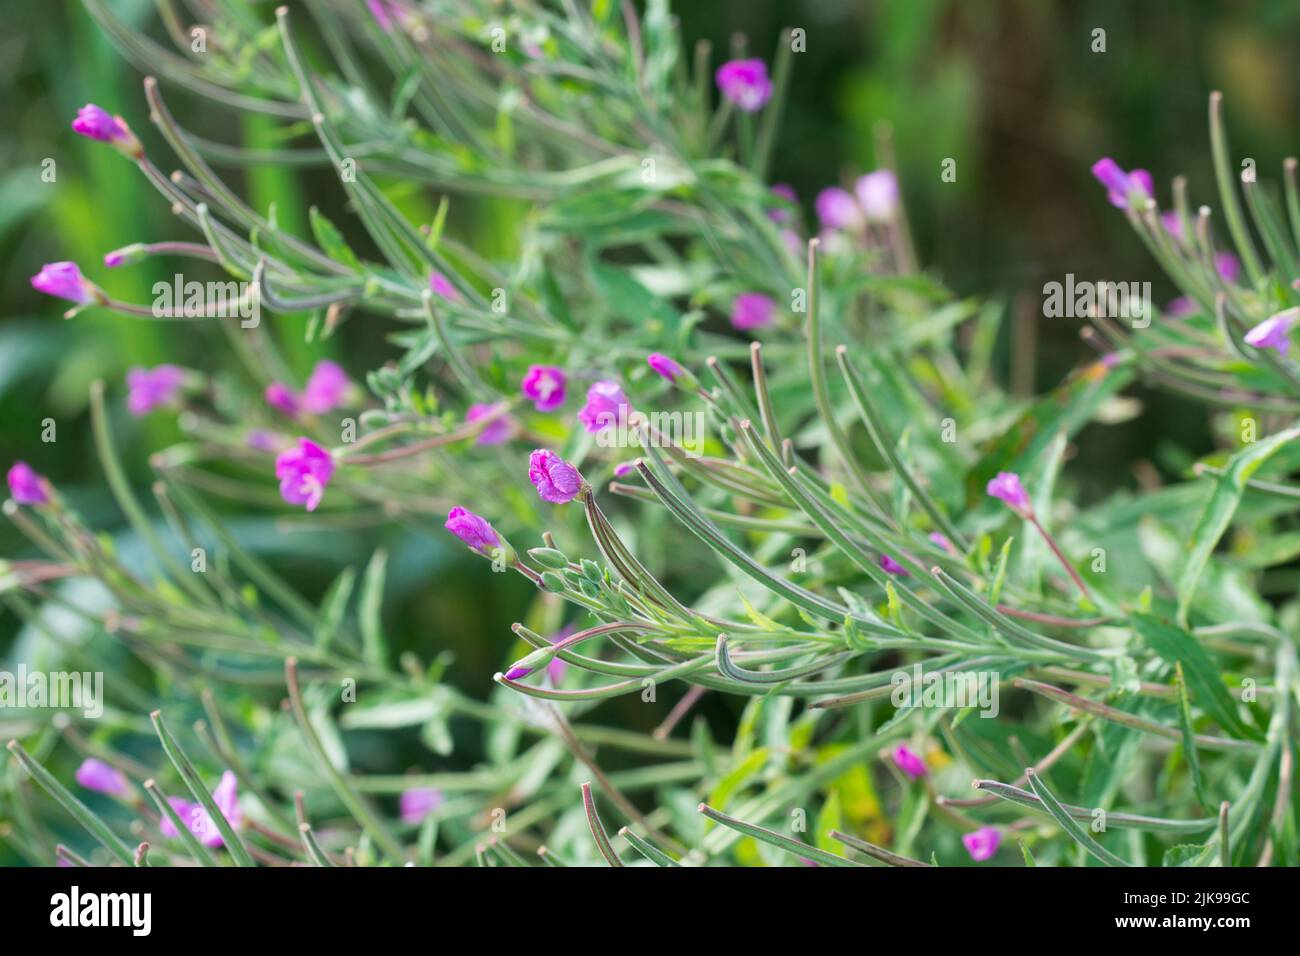 Epilobium hirsutum, great willowherb purple-pink flowers closeup selctive focus Stock Photo